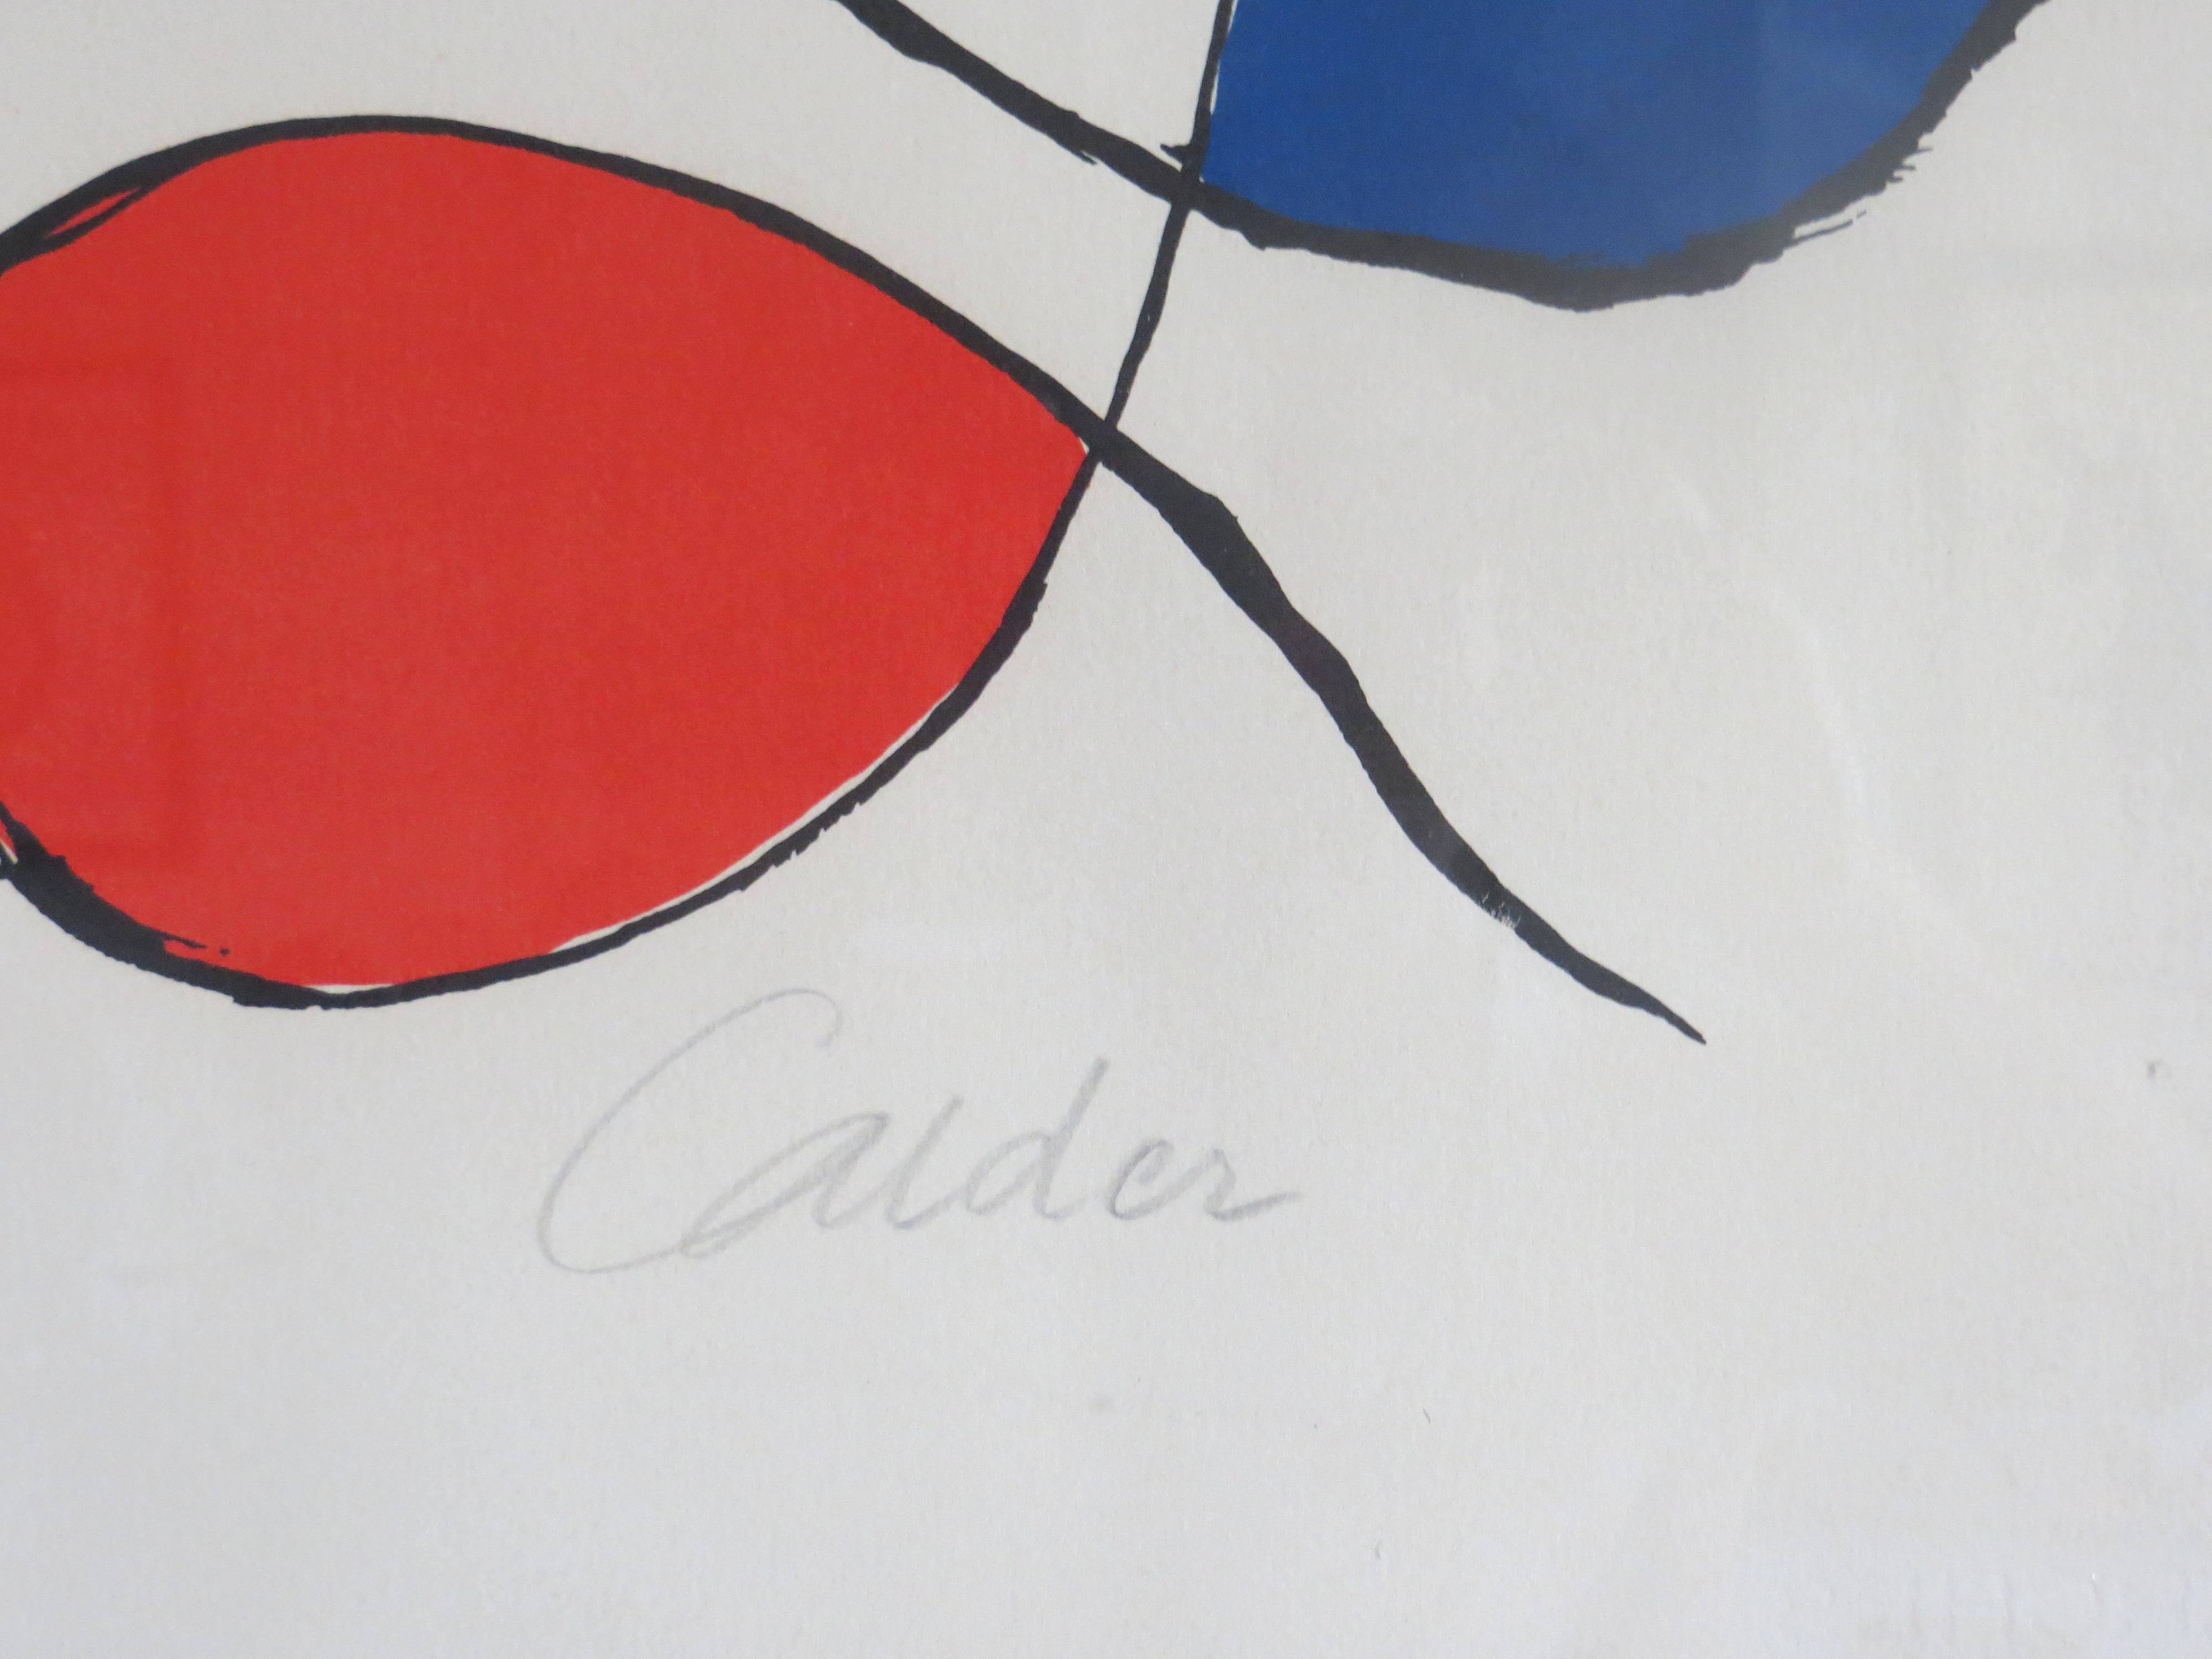  Calder